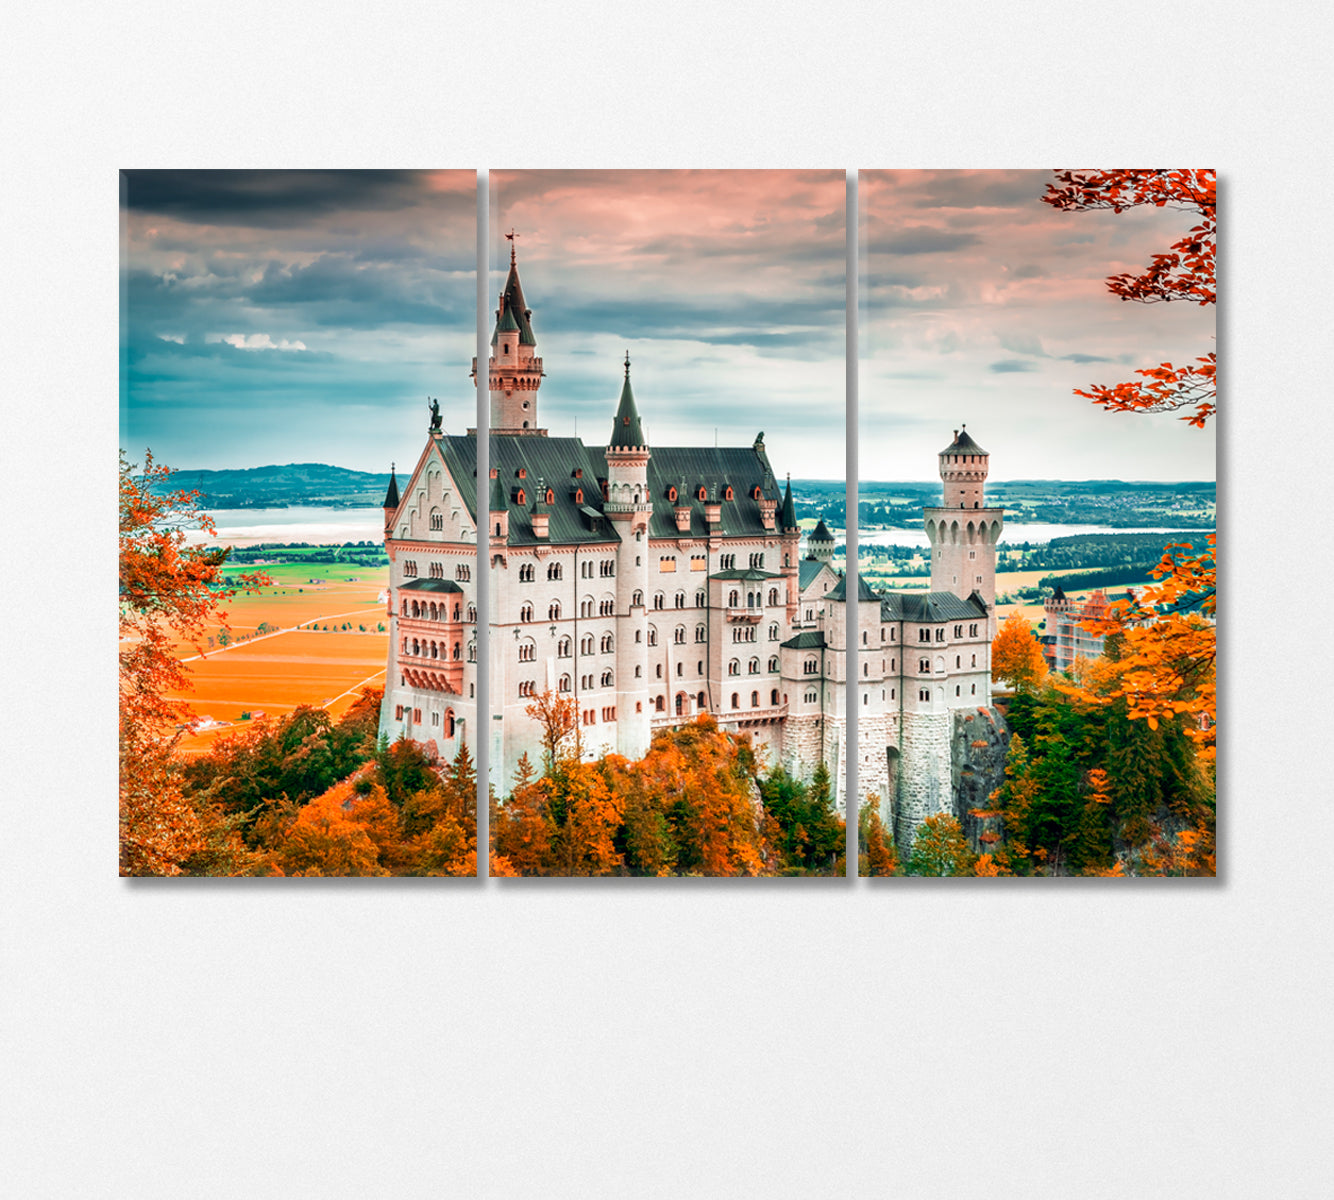 Fairytale Castle Neuschwanstein Bavaria Germany Canvas Print-Canvas Print-CetArt-3 Panels-36x24 inches-CetArt